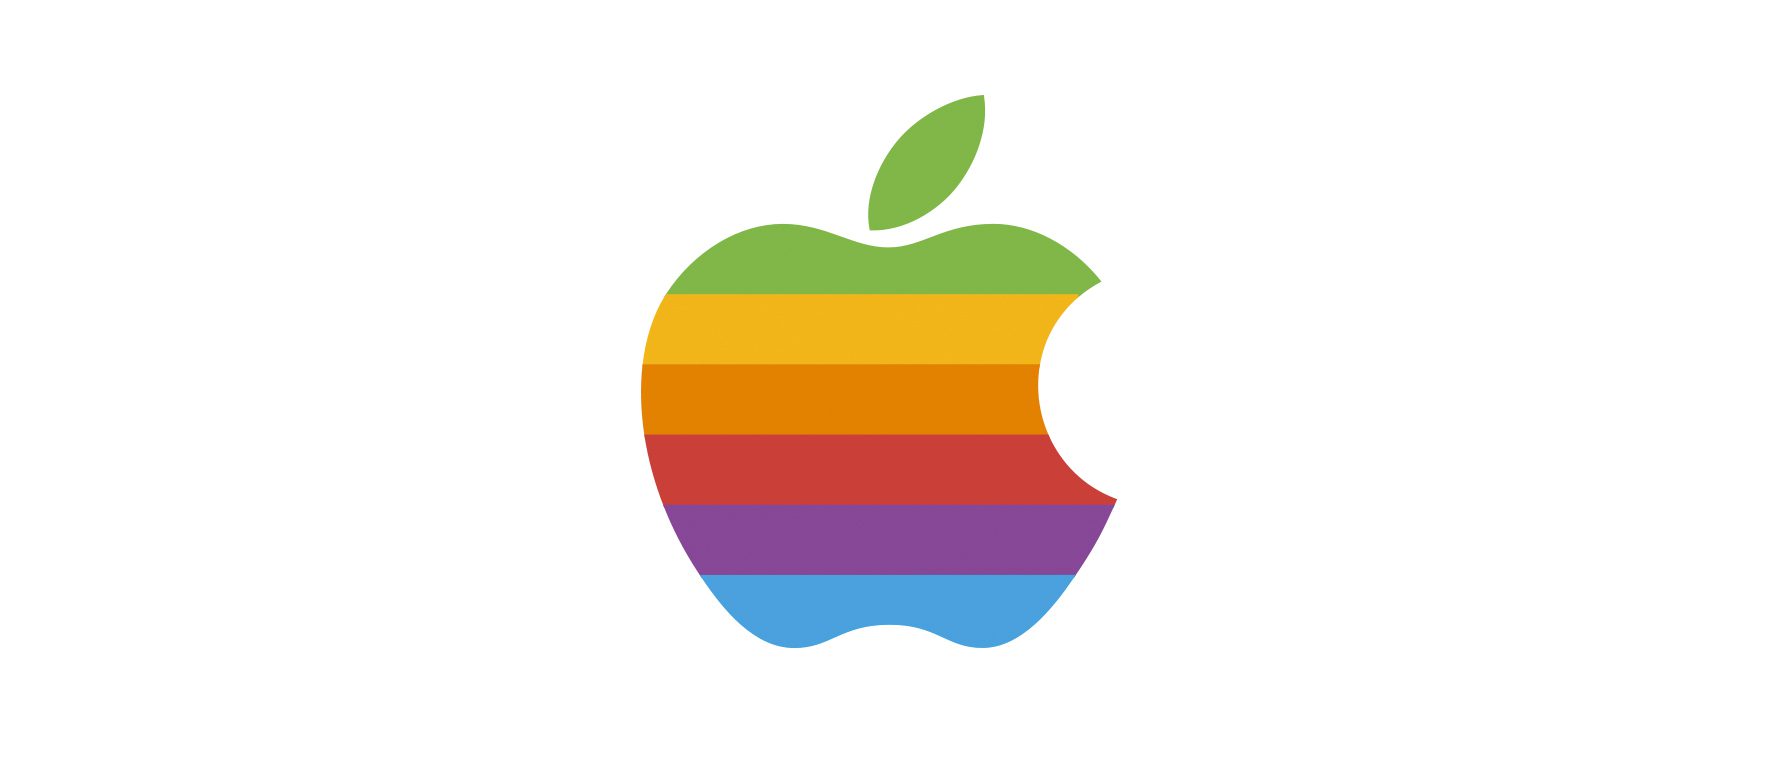 Logotipo de Apple Rob Janoff 1977